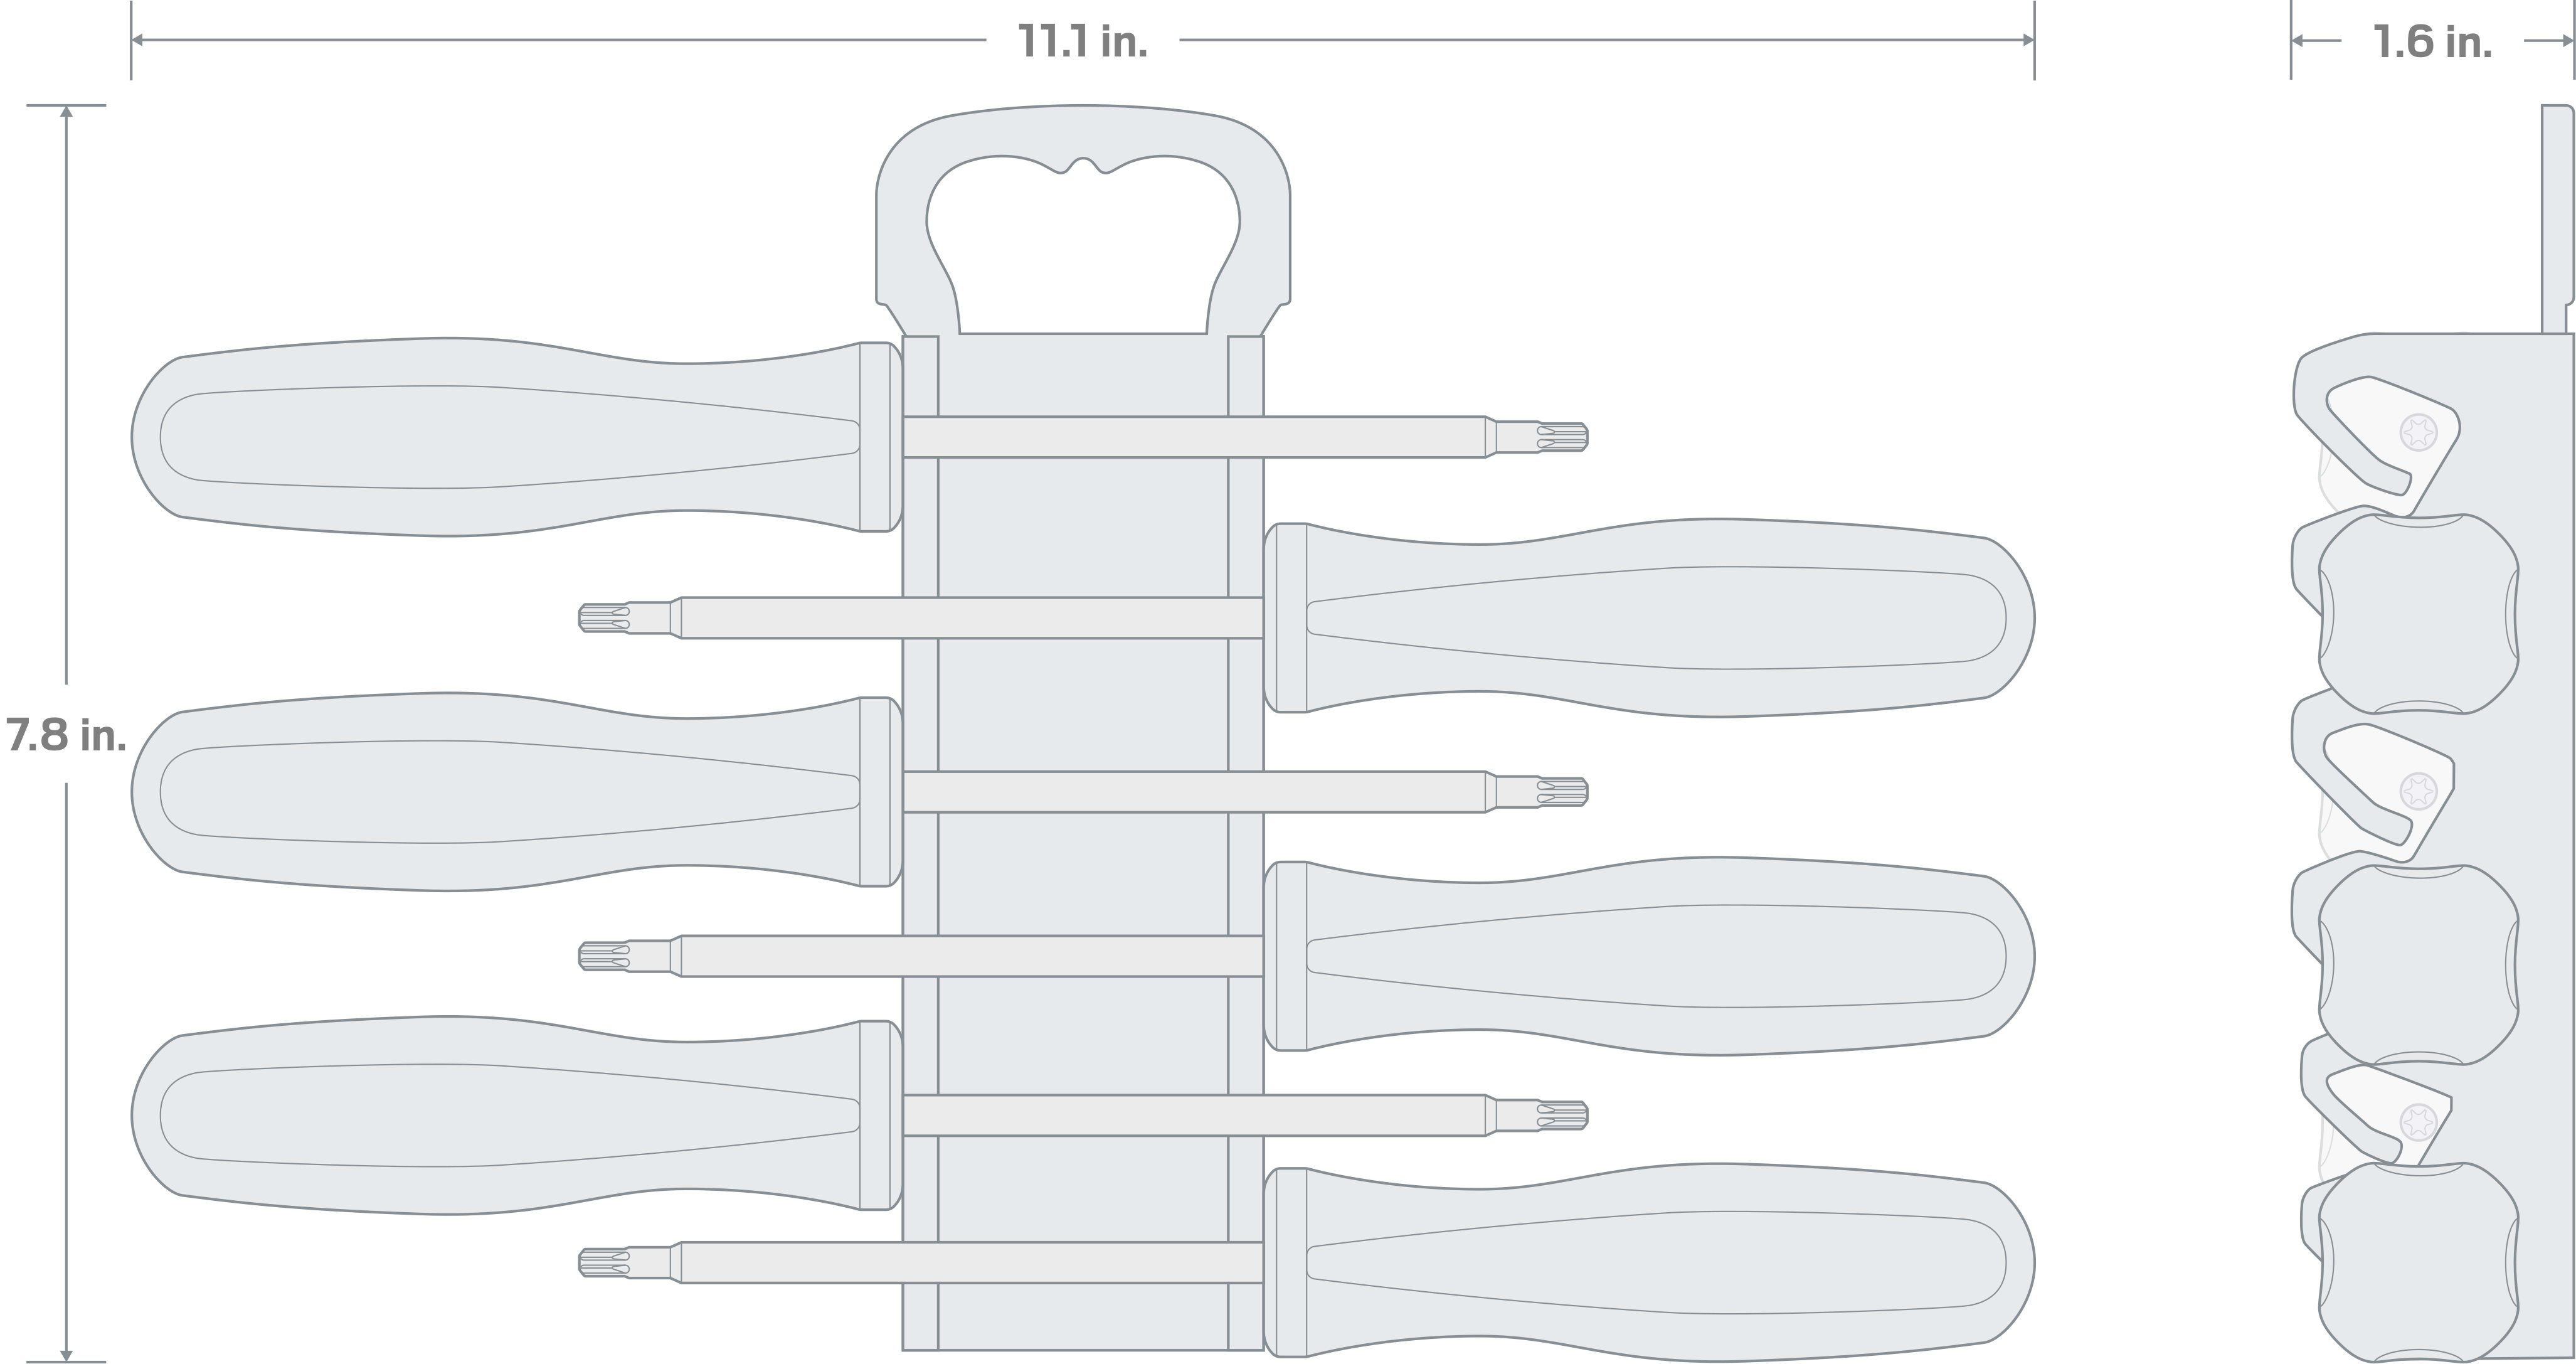 Specs for Torx Hard Handle Black Oxide Blade Screwdriver Set with Holder, 6-Piece (T10-T30) 